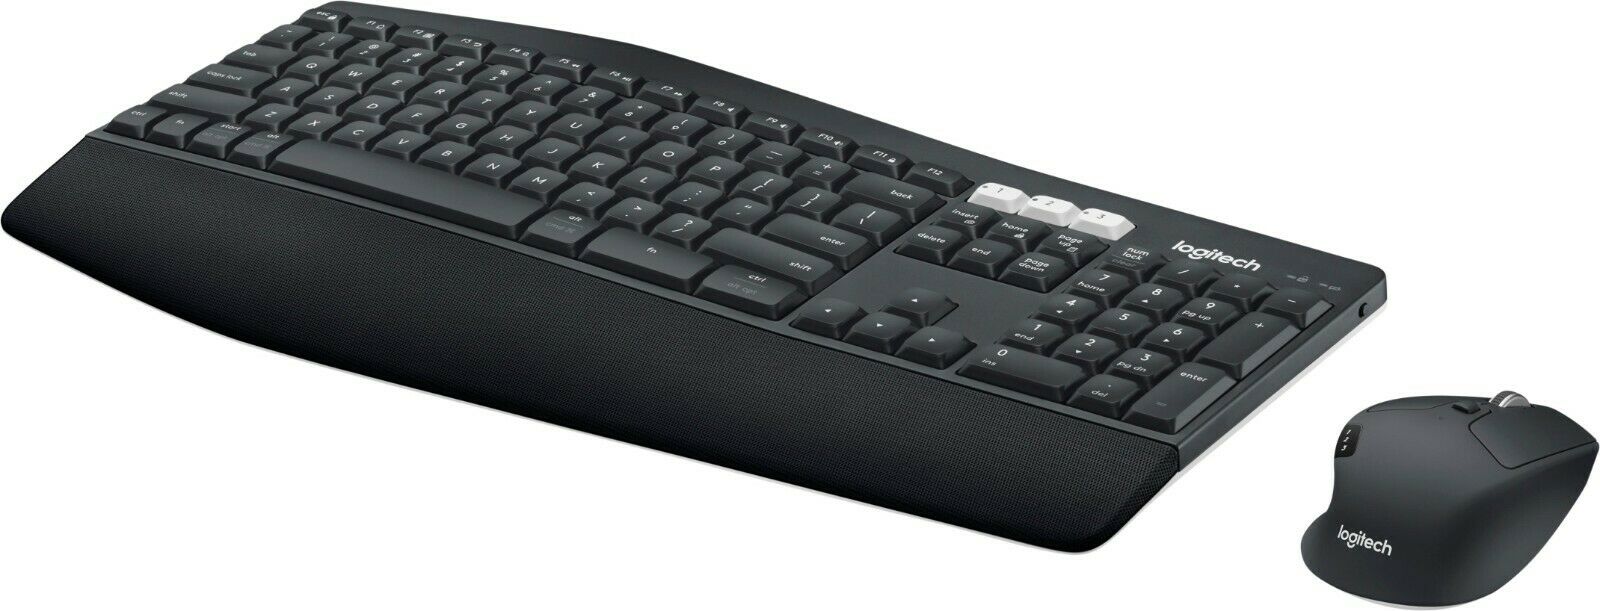 Logitech MK850 Multi-Device Wireless Keyboard Mouse Combo Pack (K850 & M720)